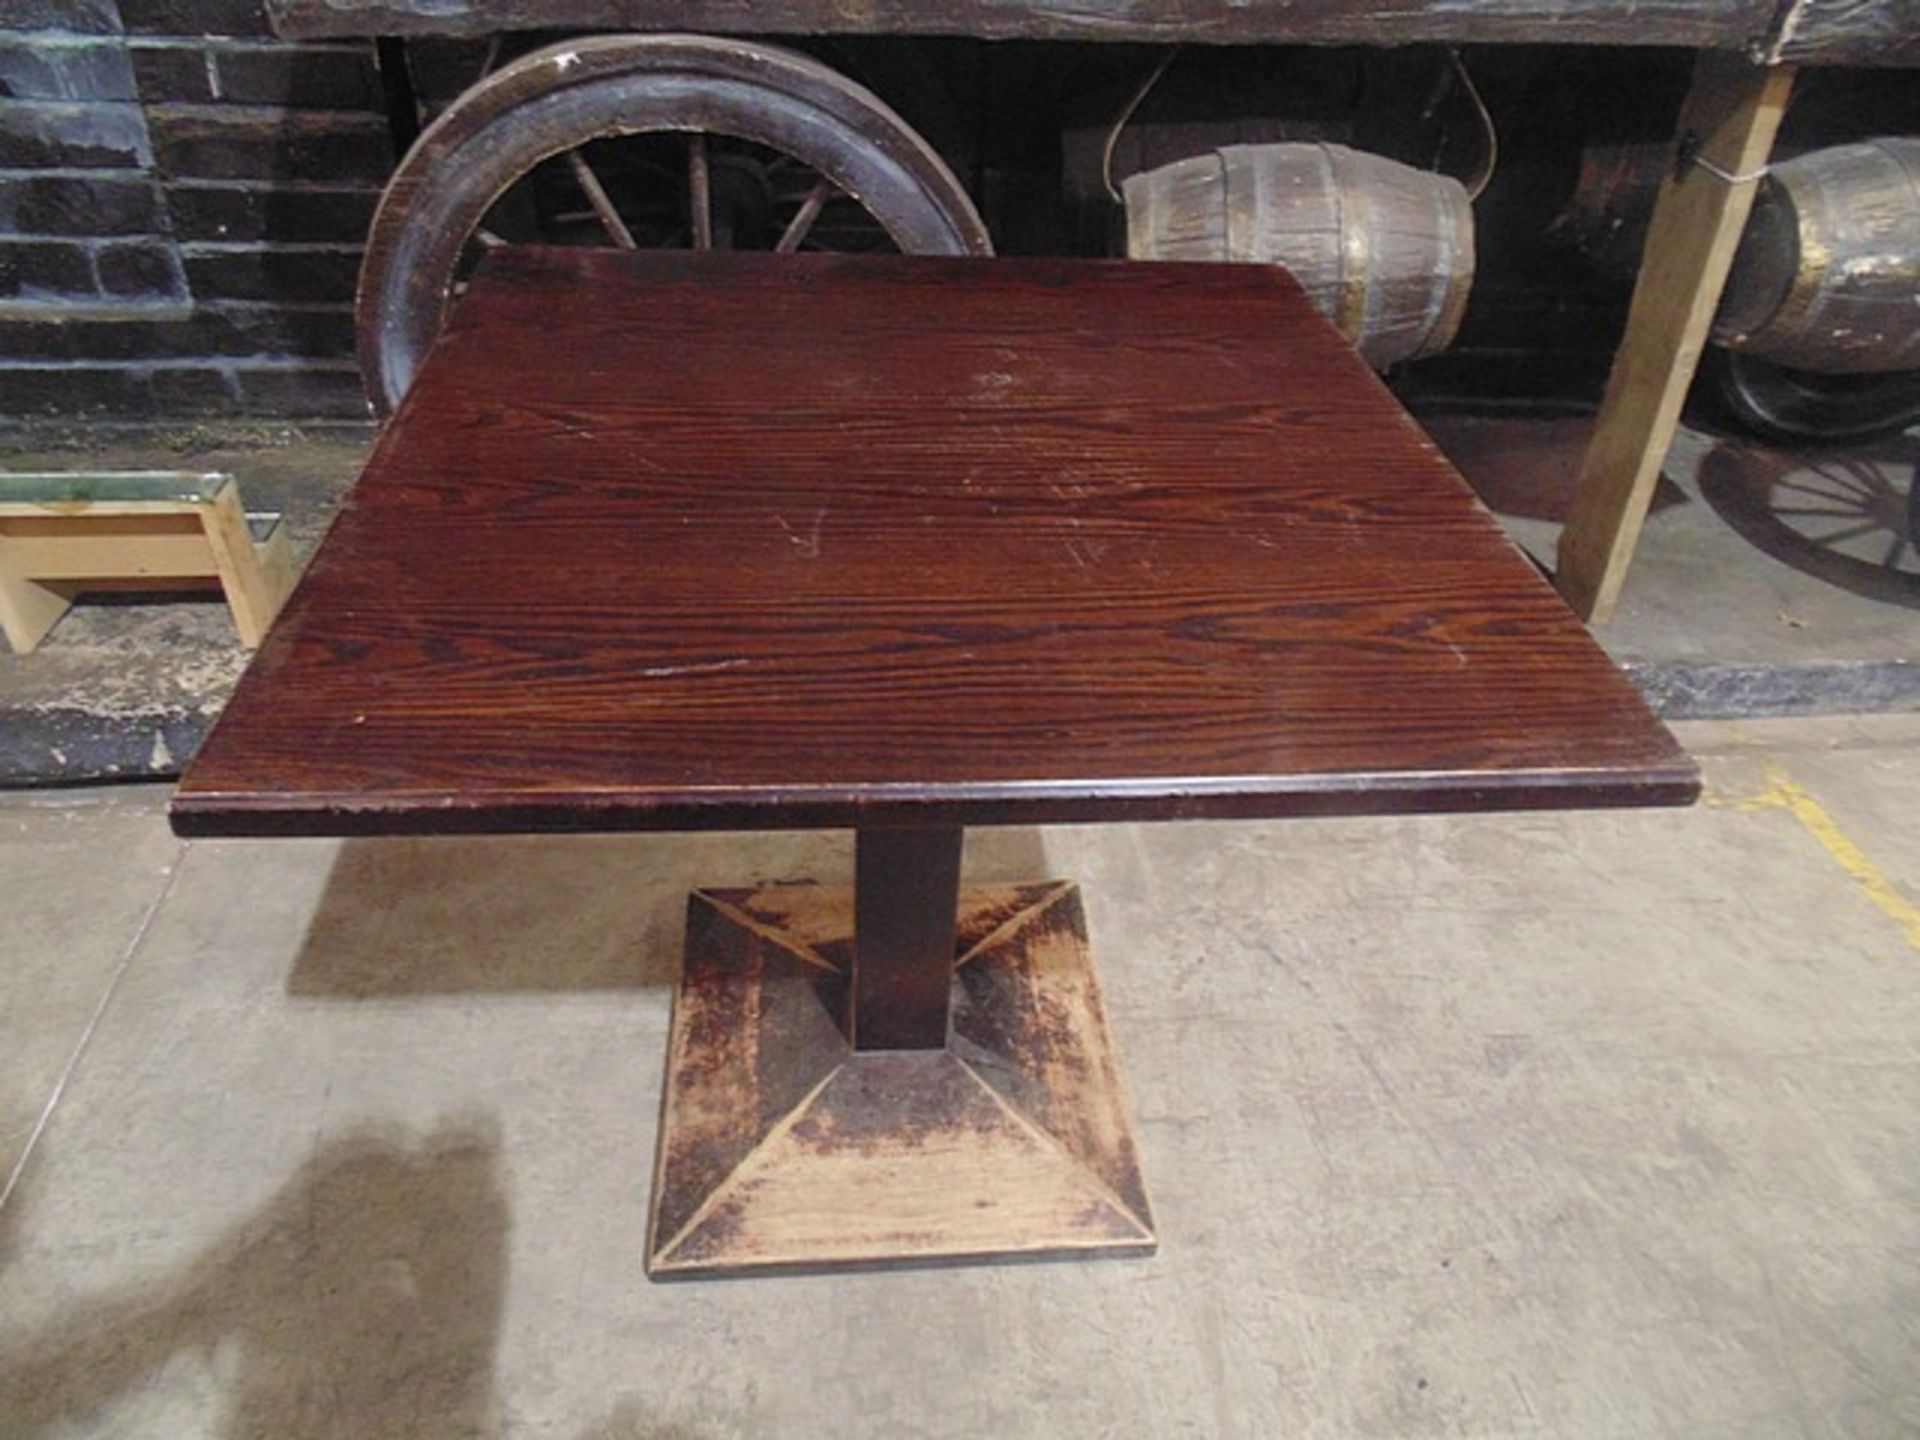 2 x Square mahogany wooden tables 800mm x 800mm x 800mm